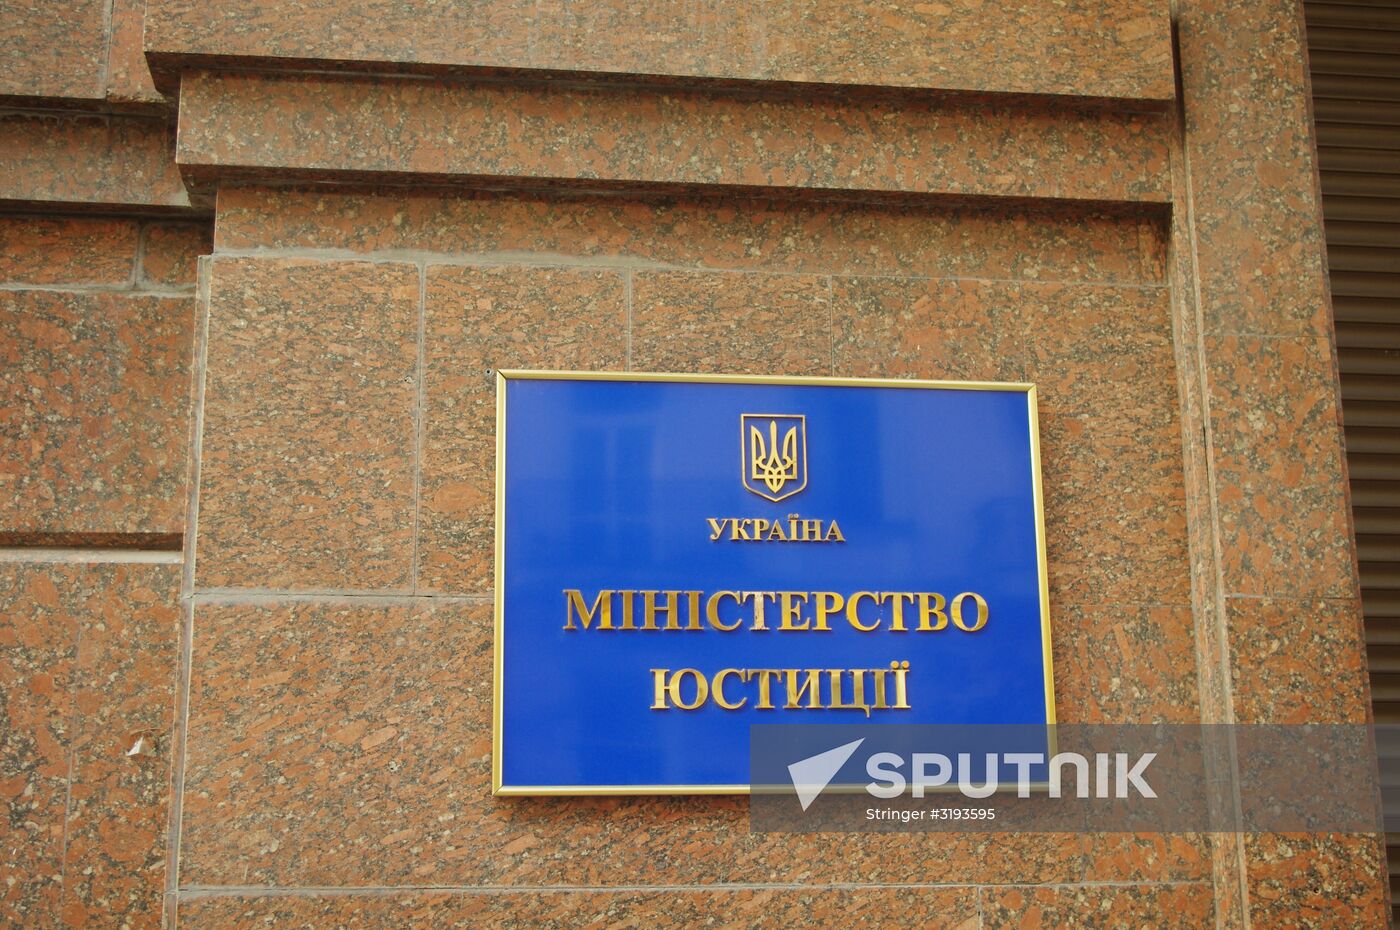 Ukrainian Justice Ministry